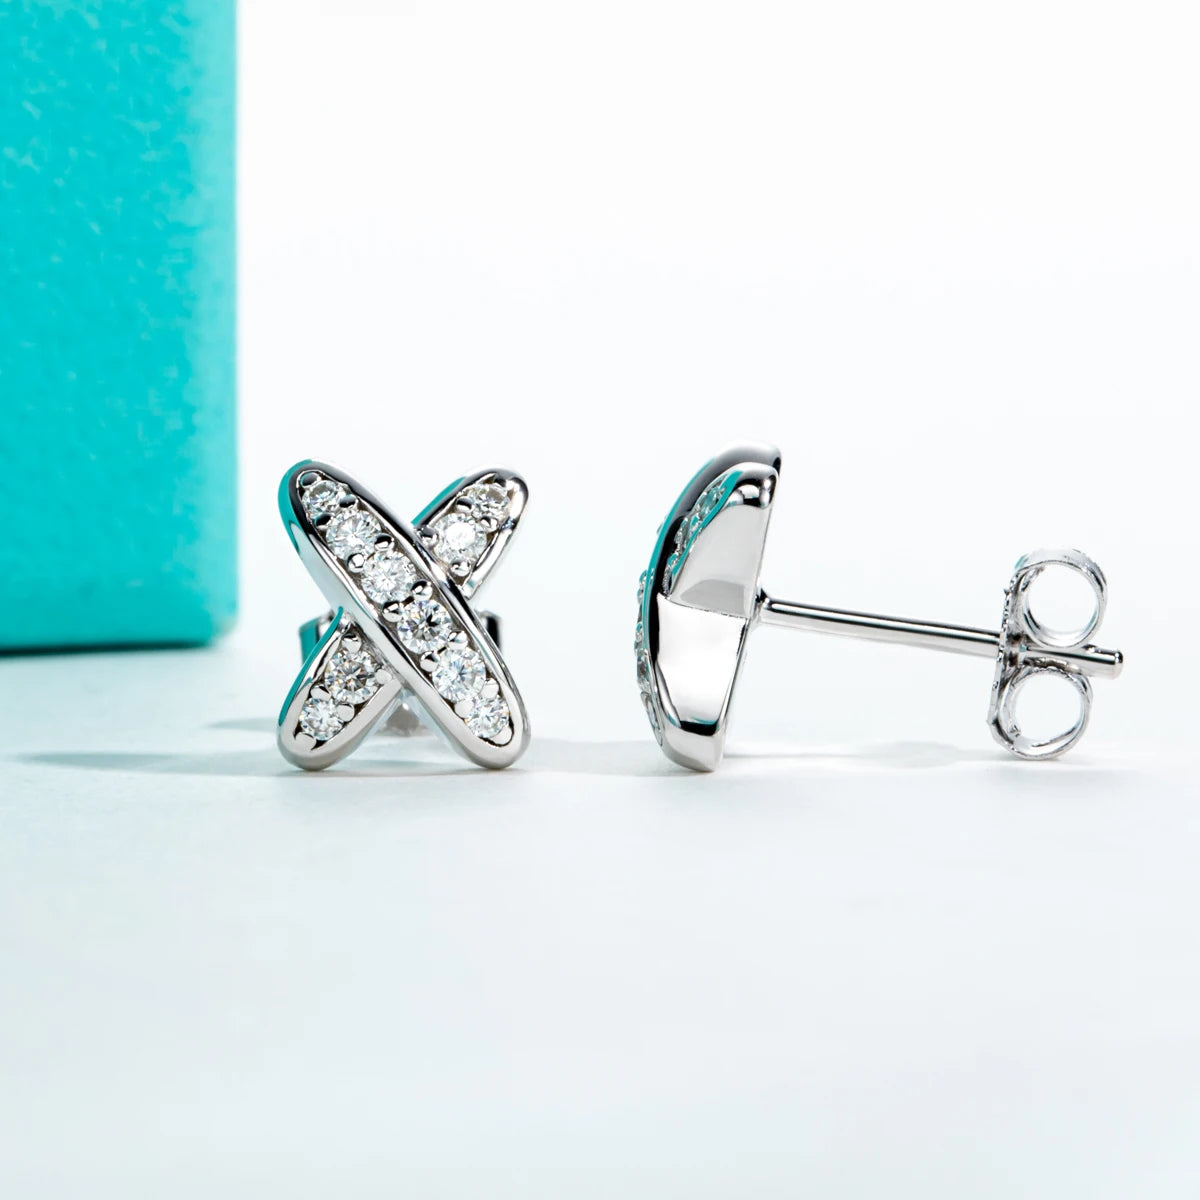 Moissanite Diamond Earrings 925 Sterling Silver D Color VVS1 Moissanite Classic Cross Stud Earrings For Woman Jewelry